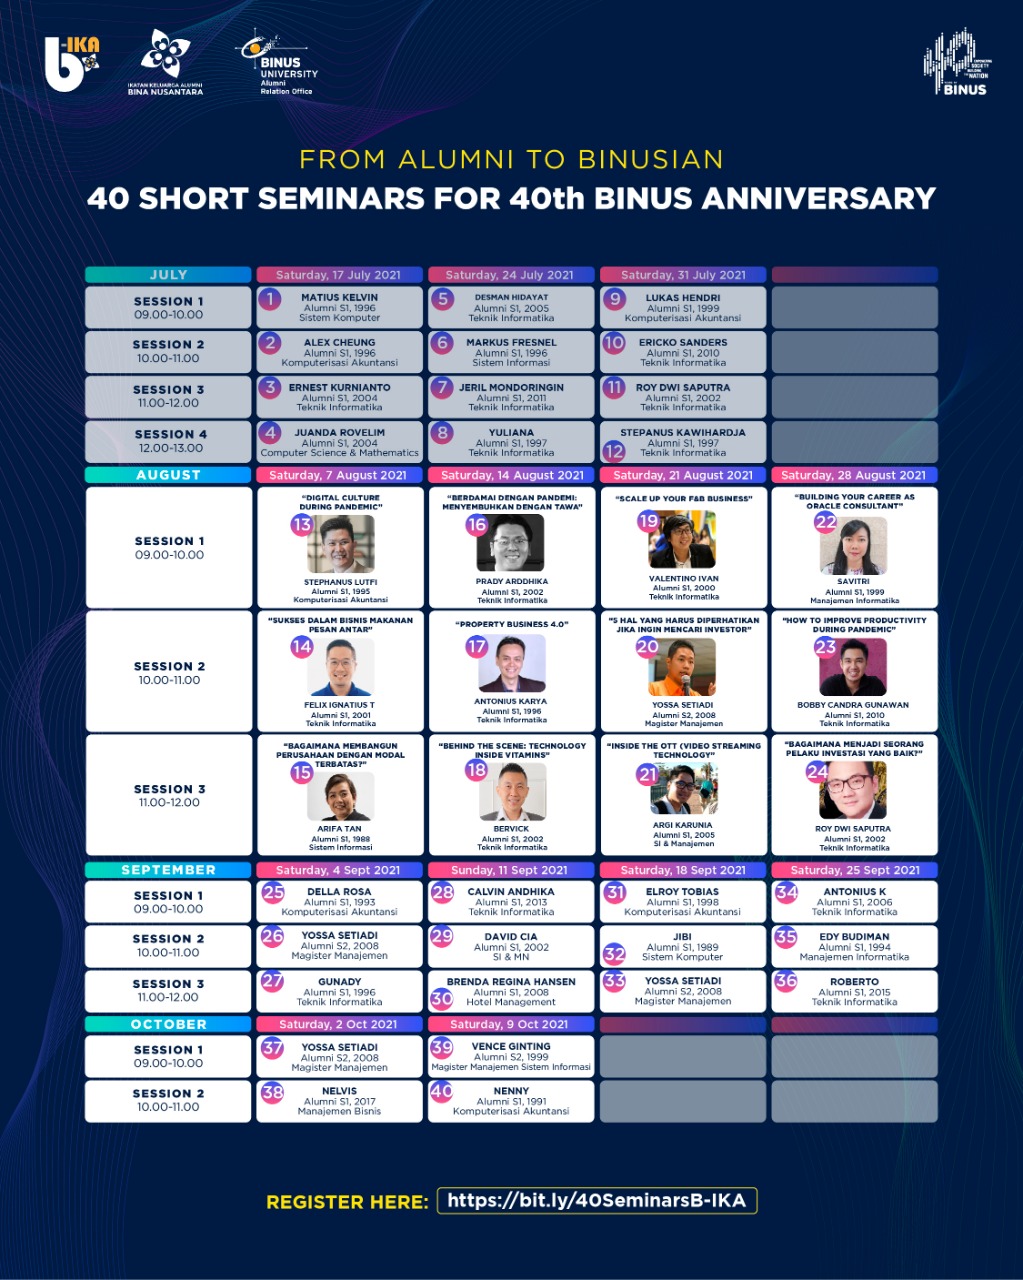 [Series 4-7] - 40 Short Seminar for 40th BINUS Anniversary